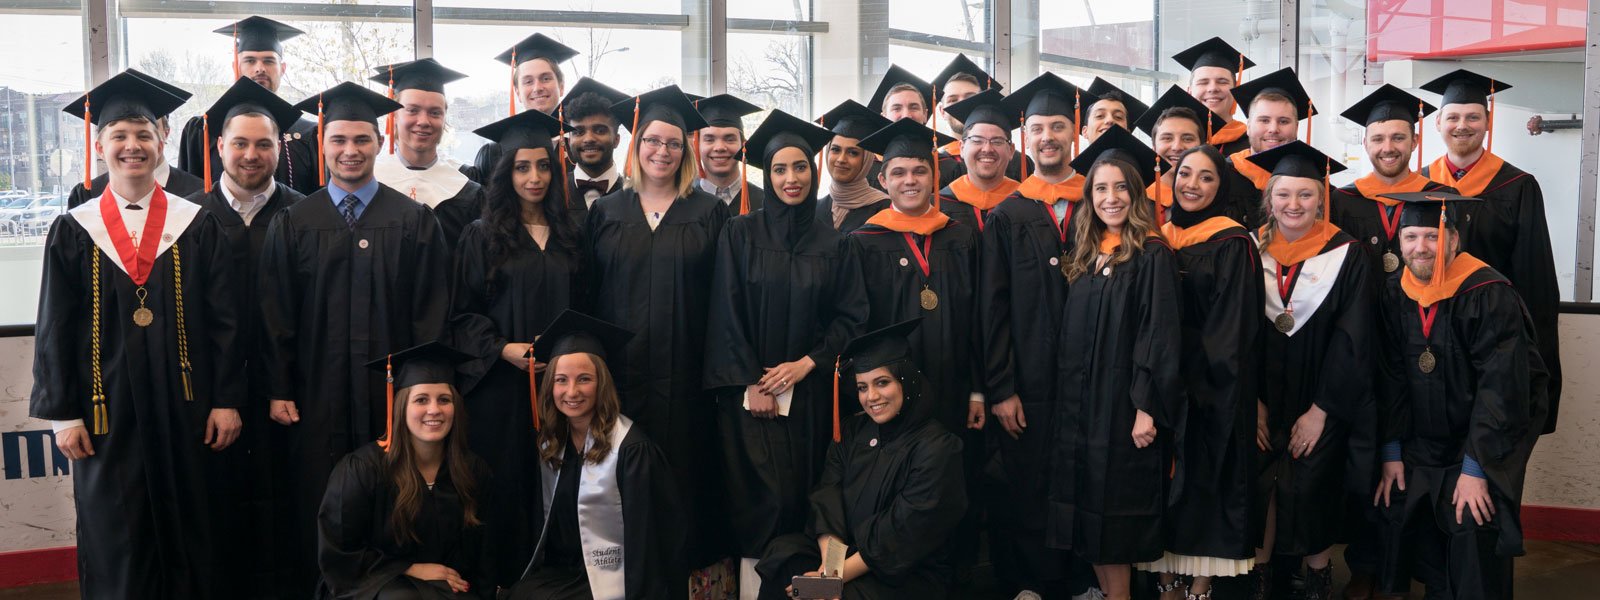 Durham graduates pose for a picture at graduation.